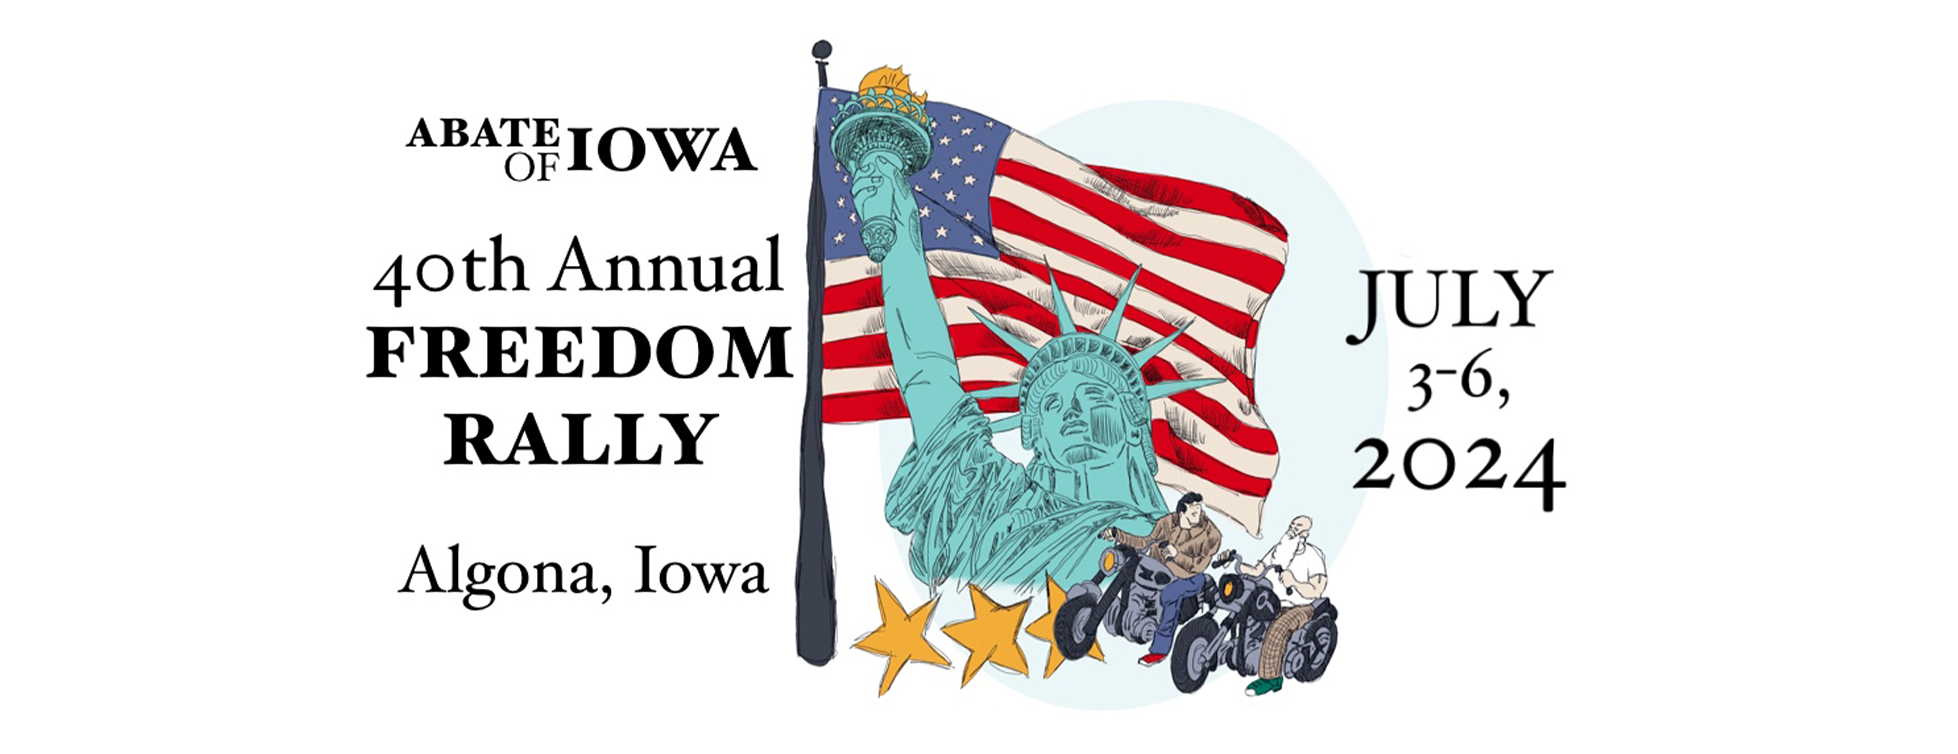 Abate of Iowa Freedom Rally 2024 banner